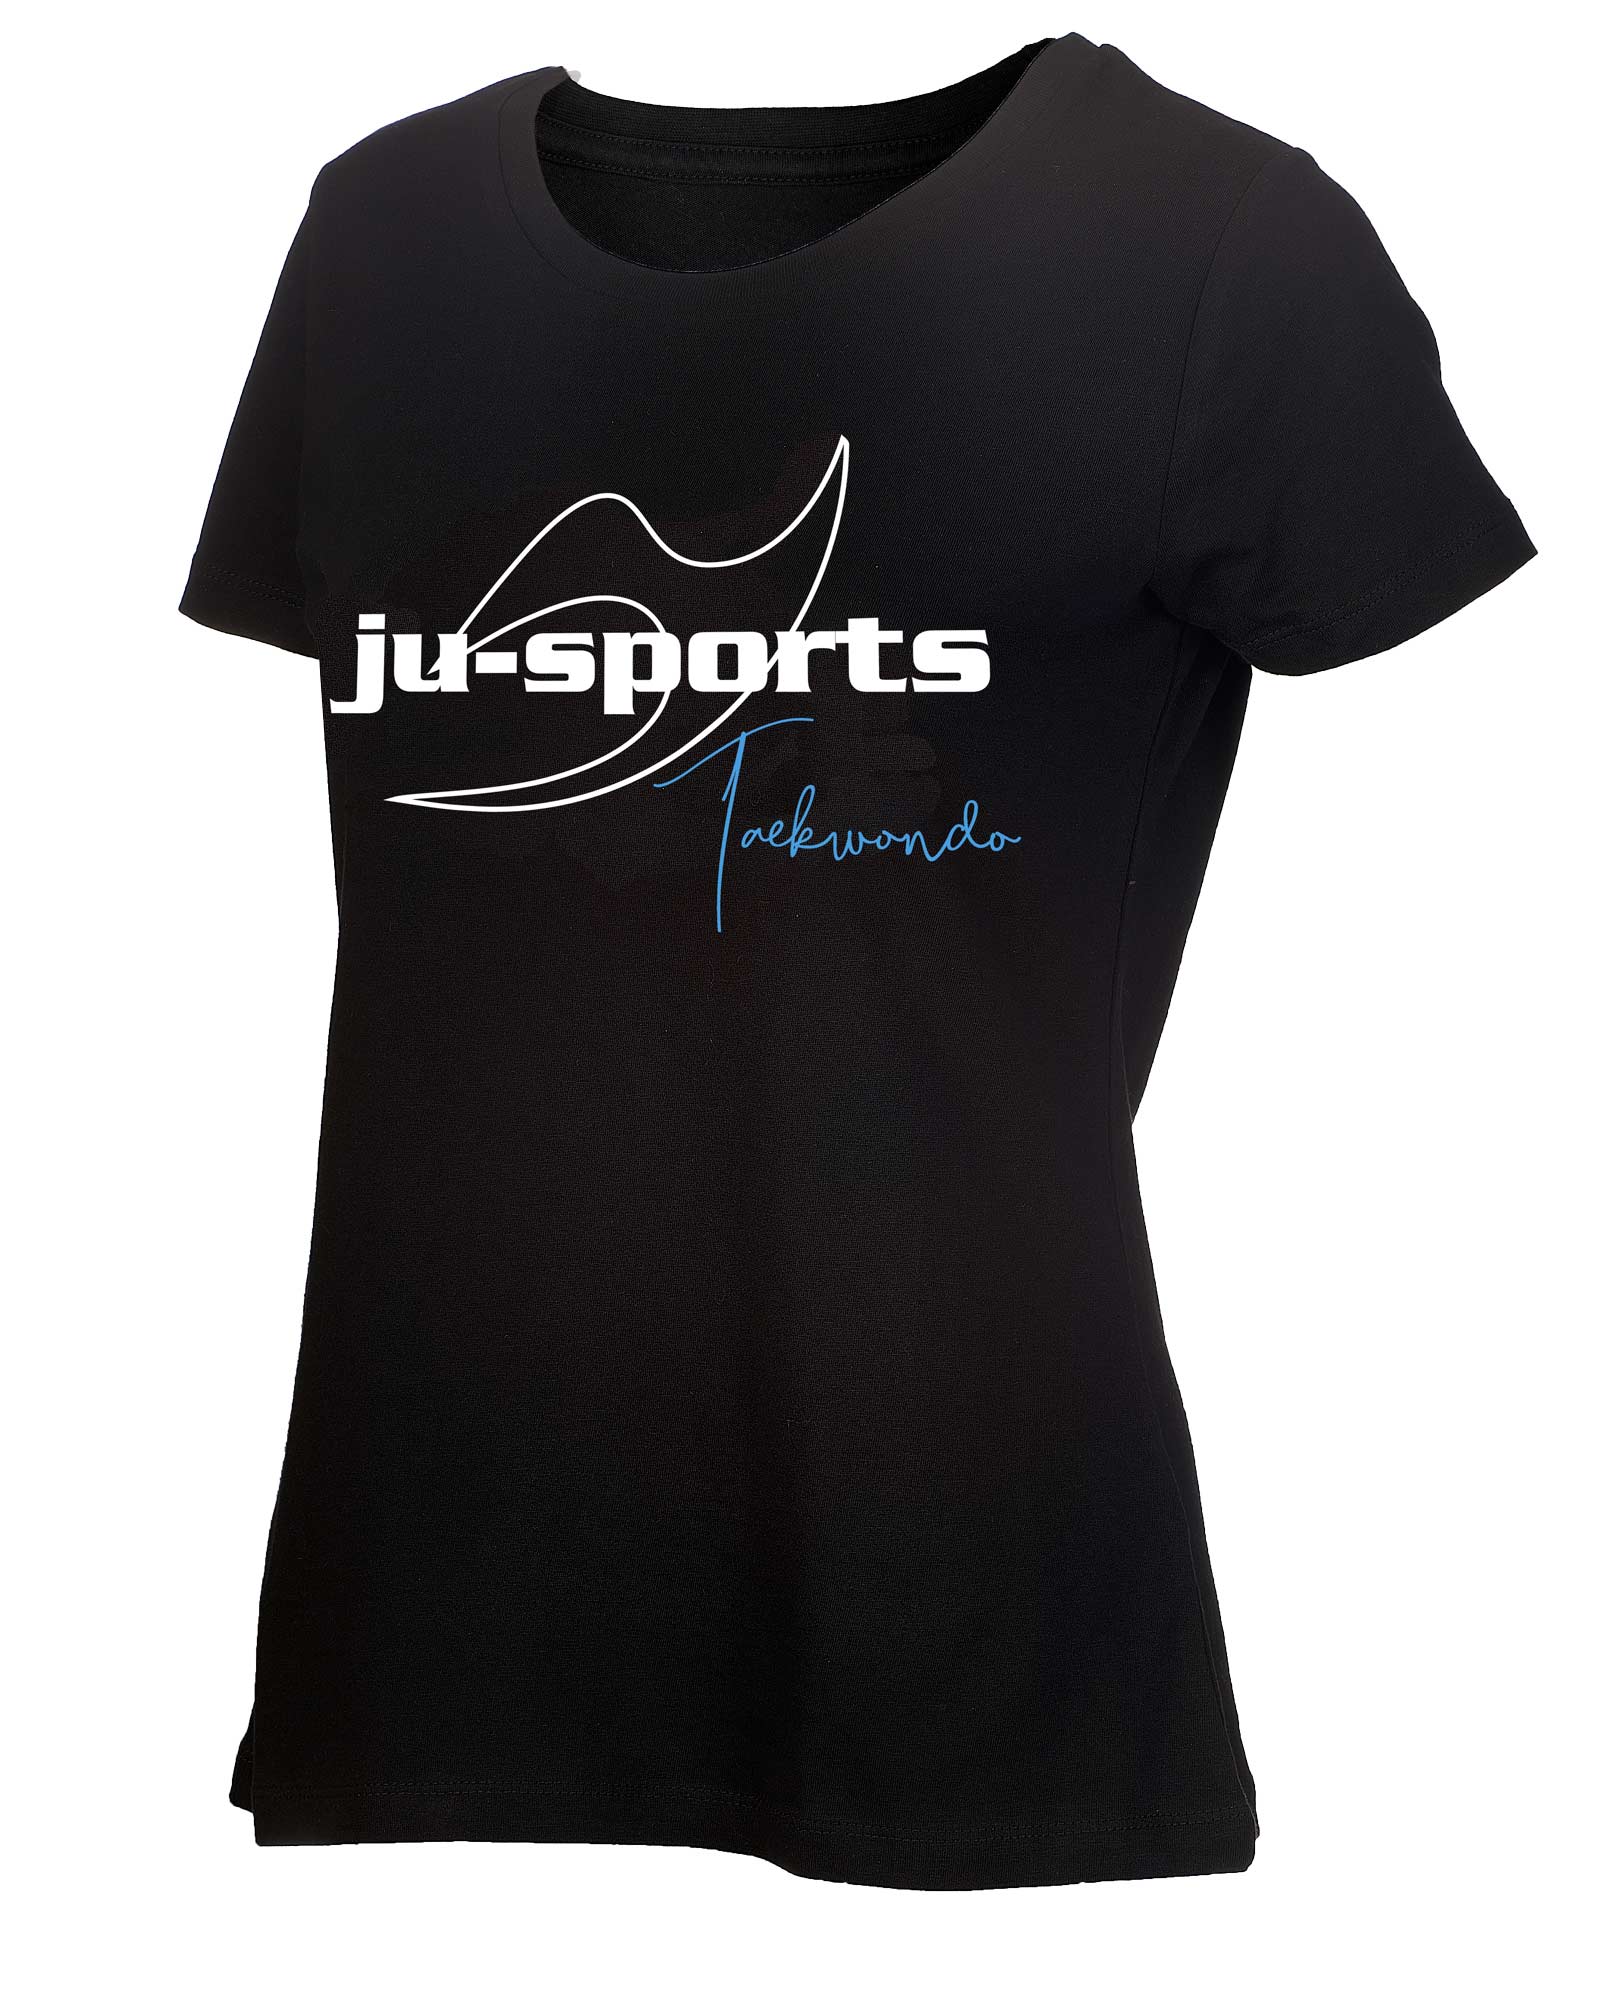 Ju-Sports Signature Line "Taekwondo" T-Shirt ladycut